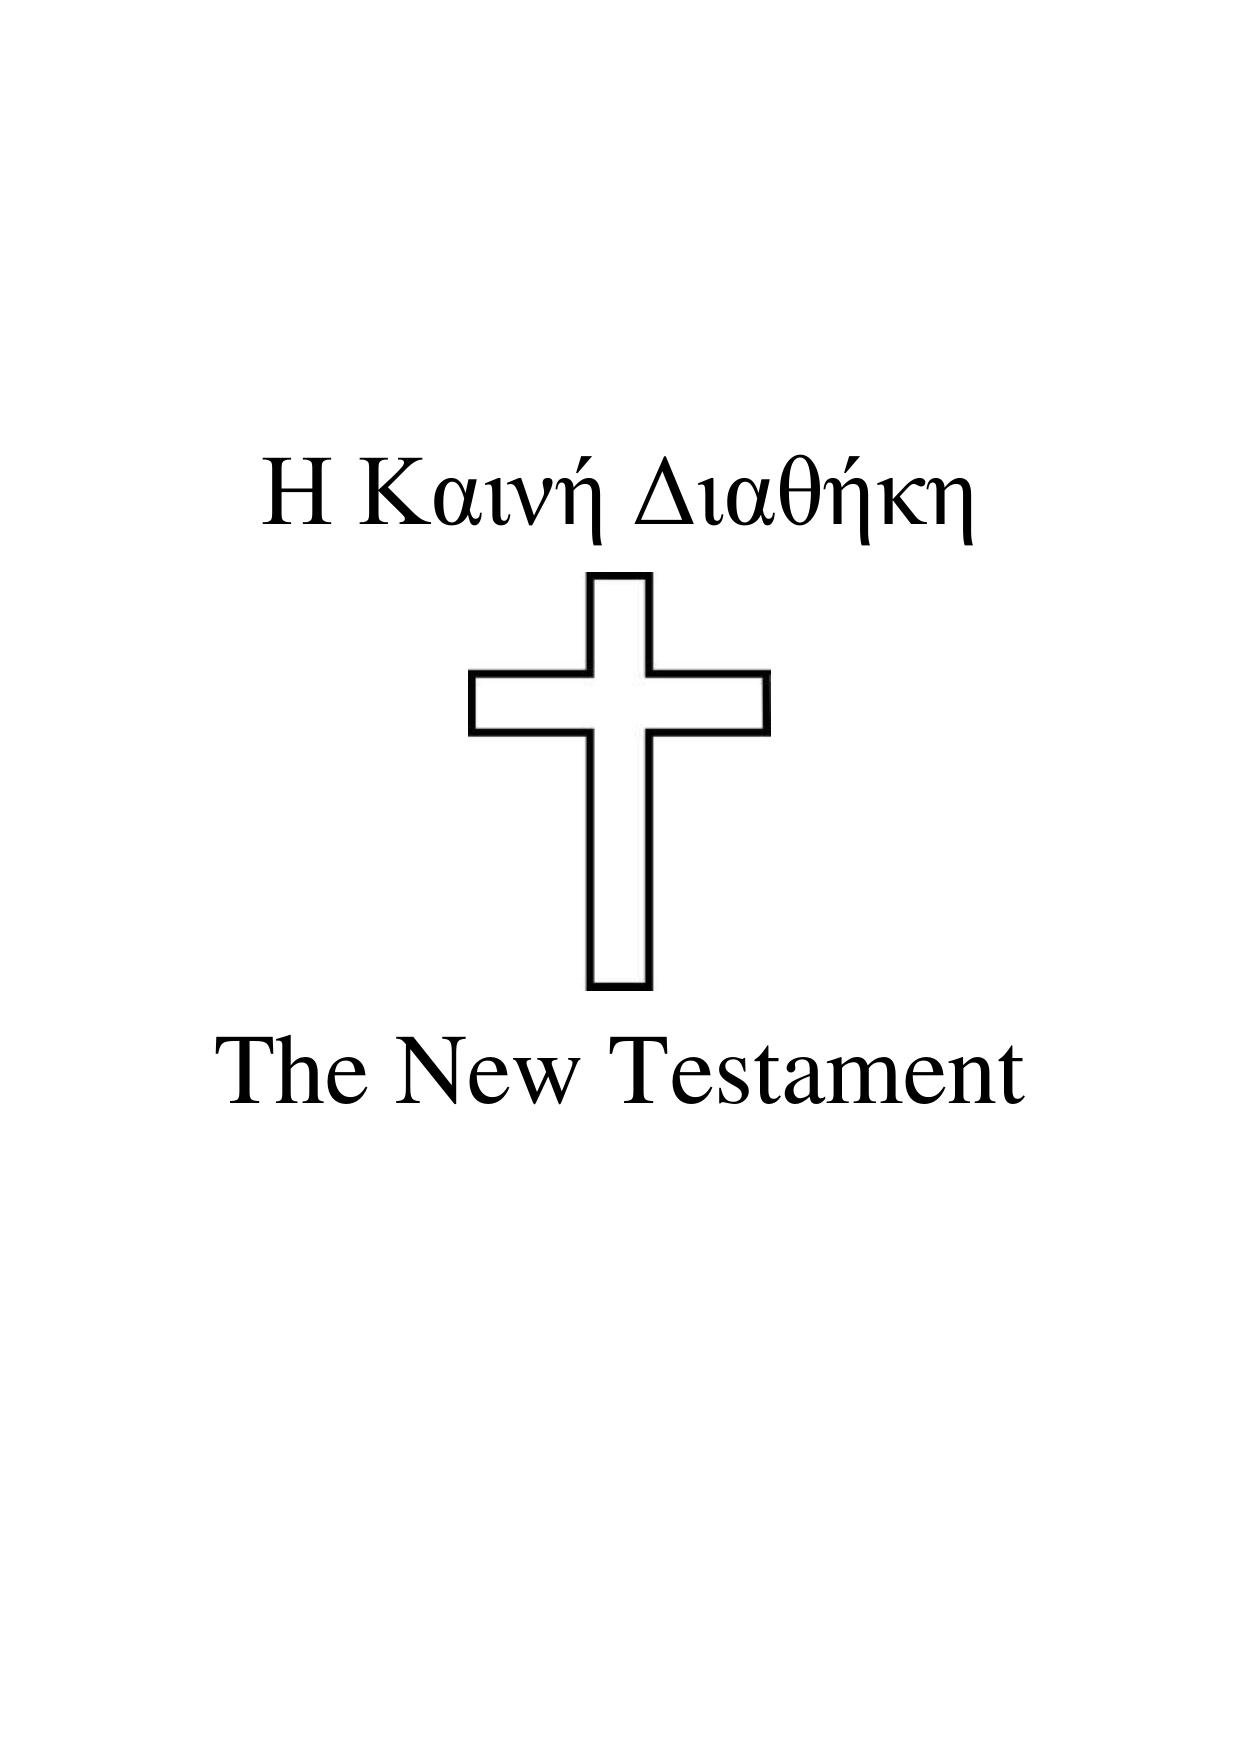 Interlinear Greek-English New Testament (Bible)